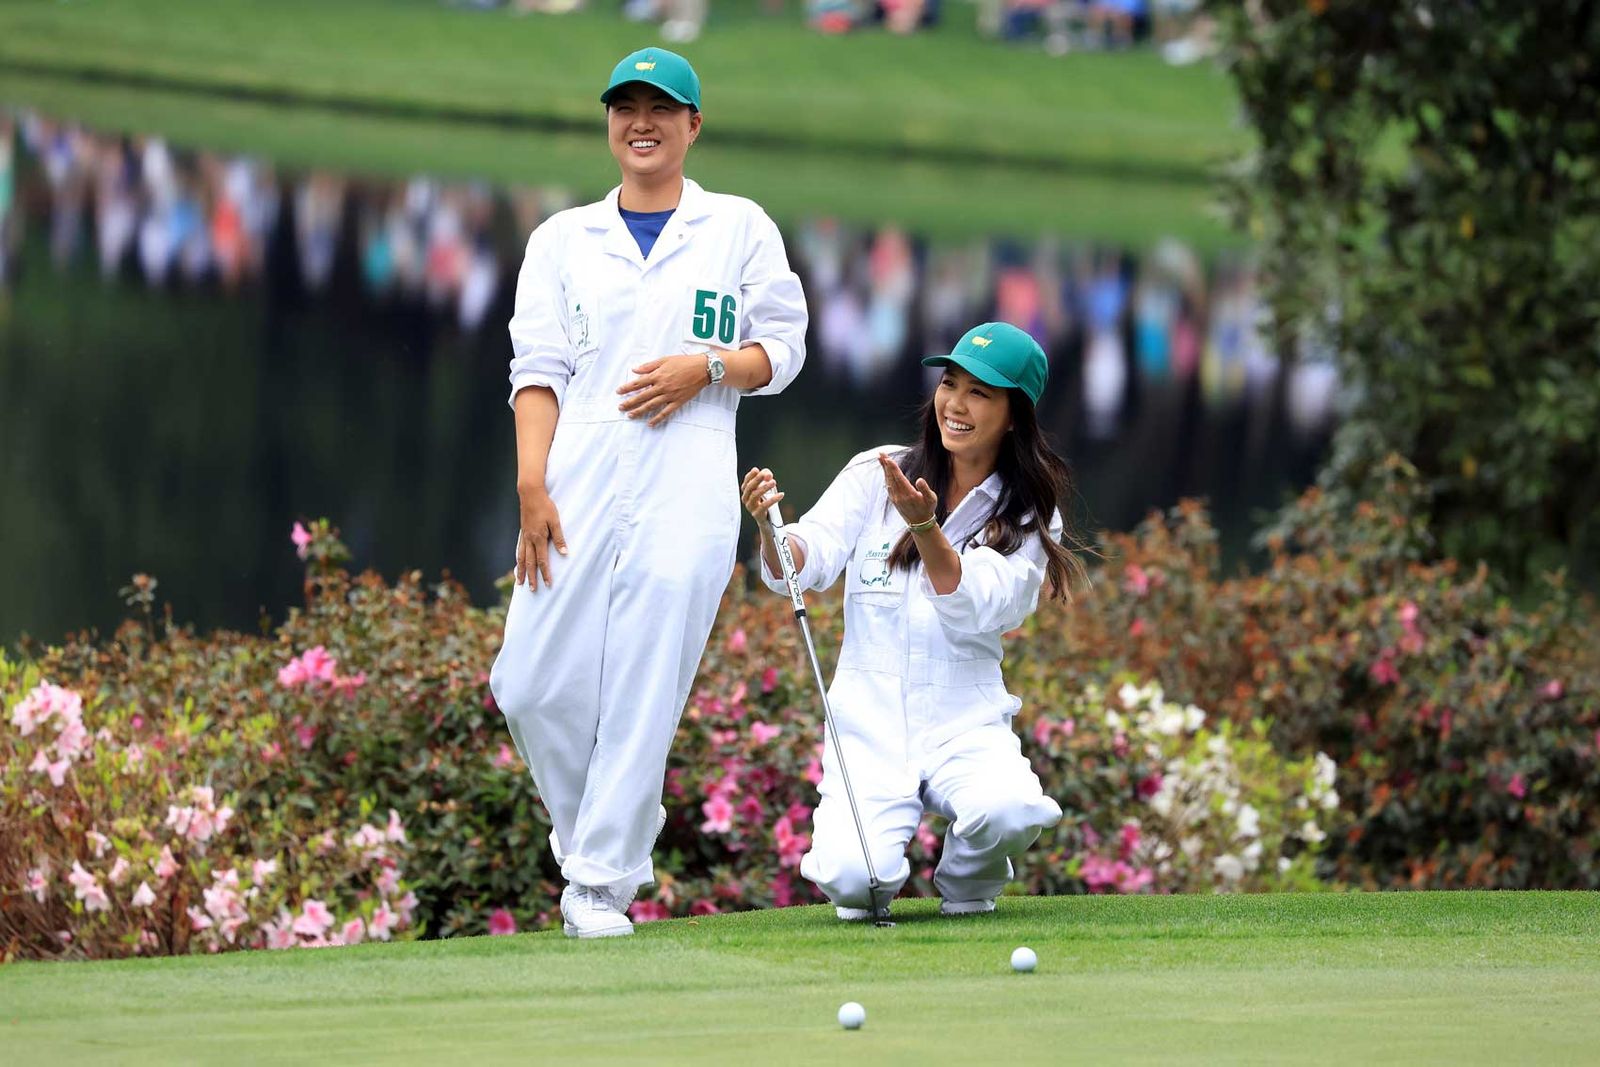 Pro golfer Minjee Lee and Katherine Zhu, fiancé of pro Collin Morikaw